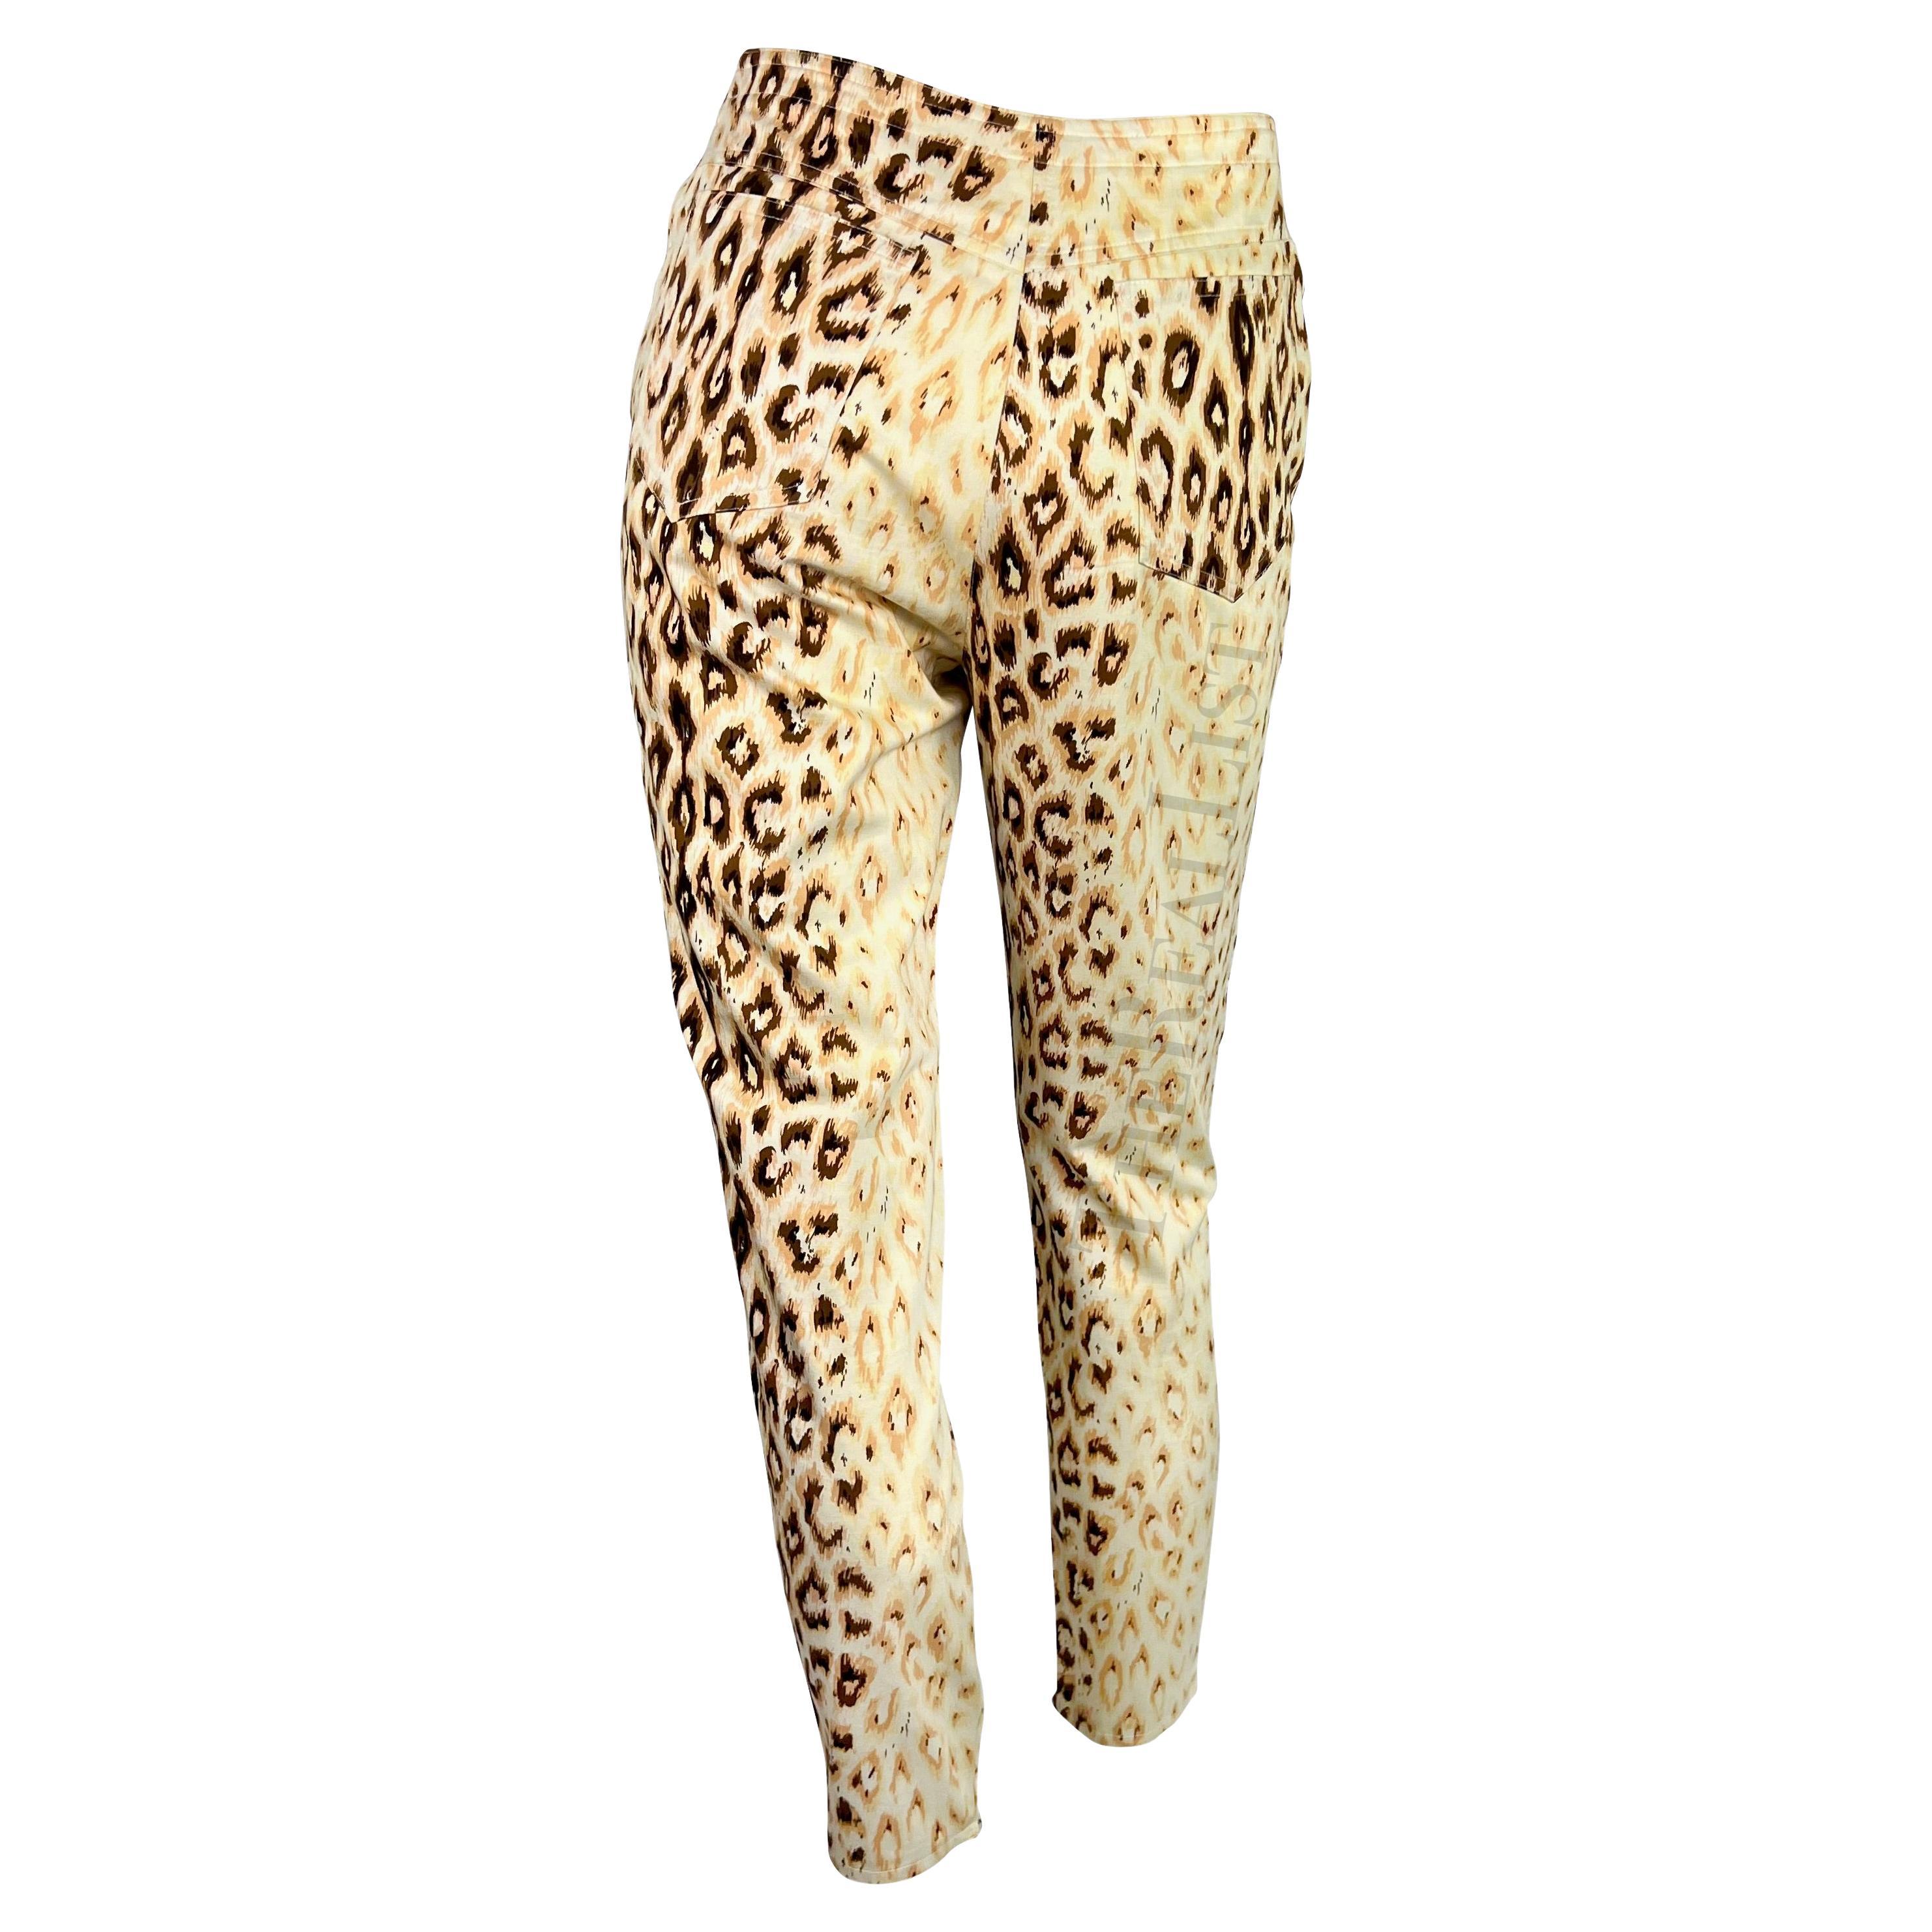 S/S 1992 Dolce & Gabbana Creme Cheetah Print Cropped Biker Jacket Pant Set For Sale 7